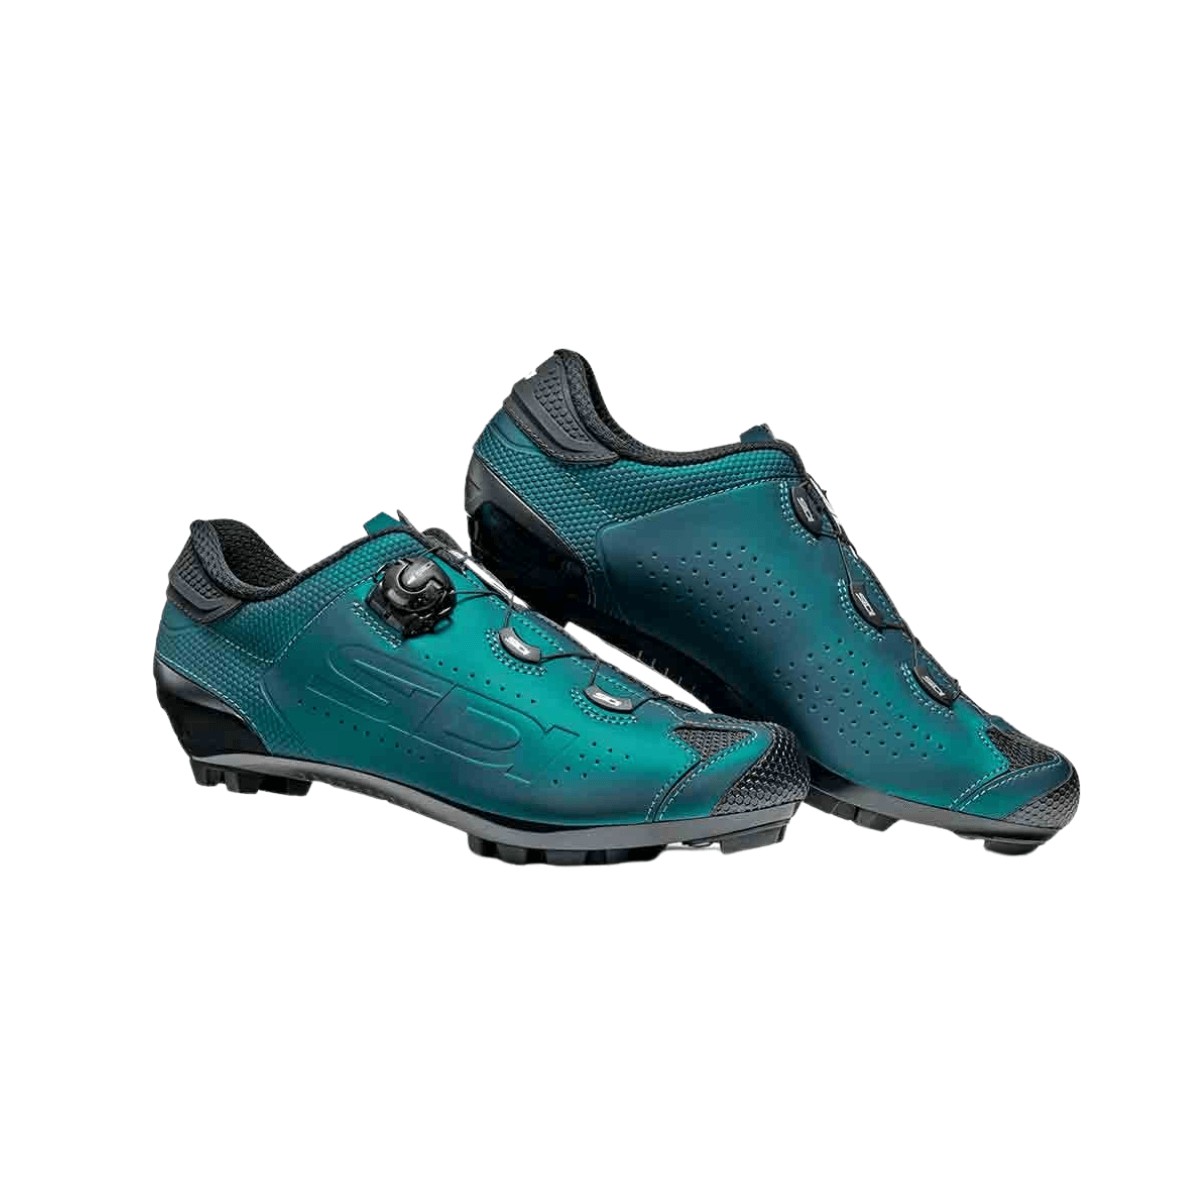 Chaussures Sidi MTB Dust Vert Bleu AW22, Taille 41 - EUR